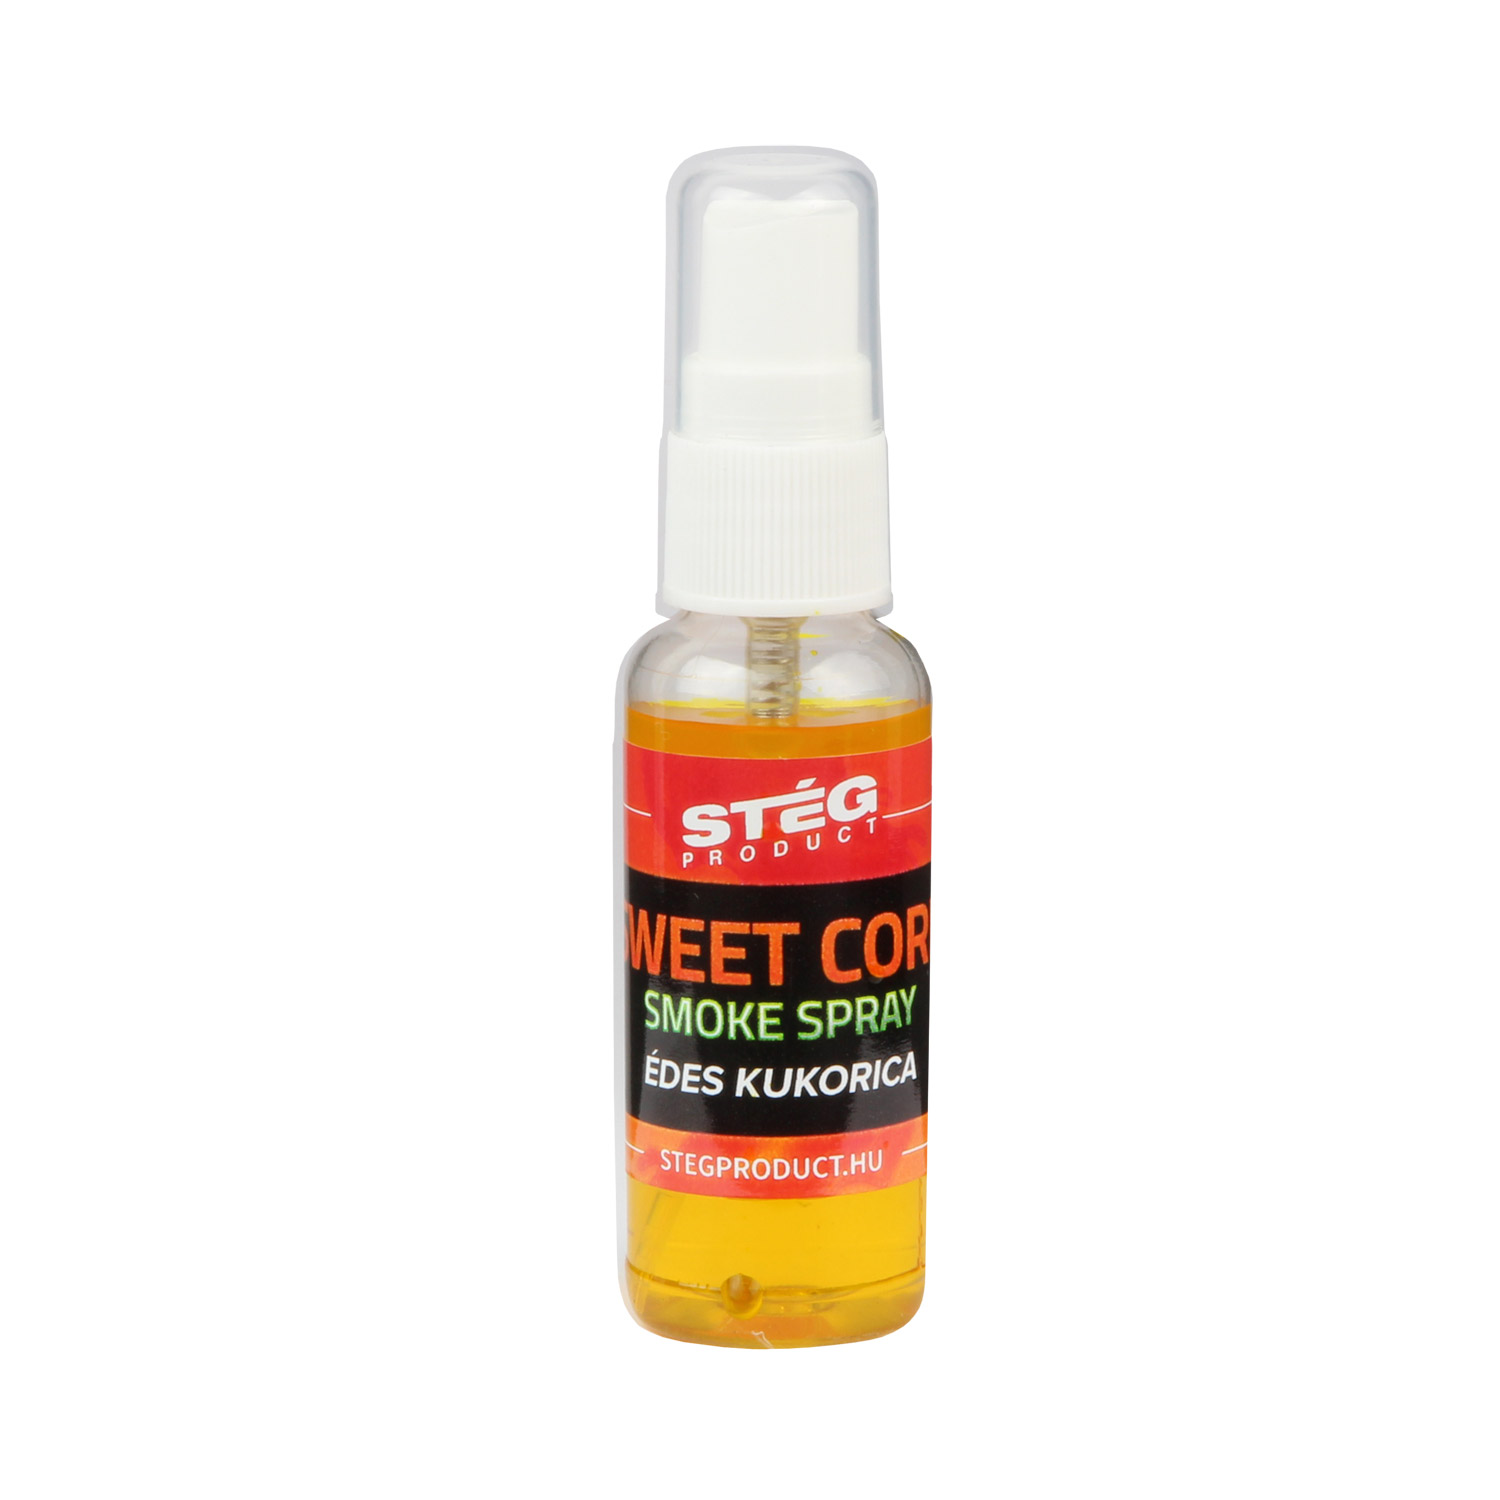 Stg Product Smoke Spray Sweet Corn 30ml